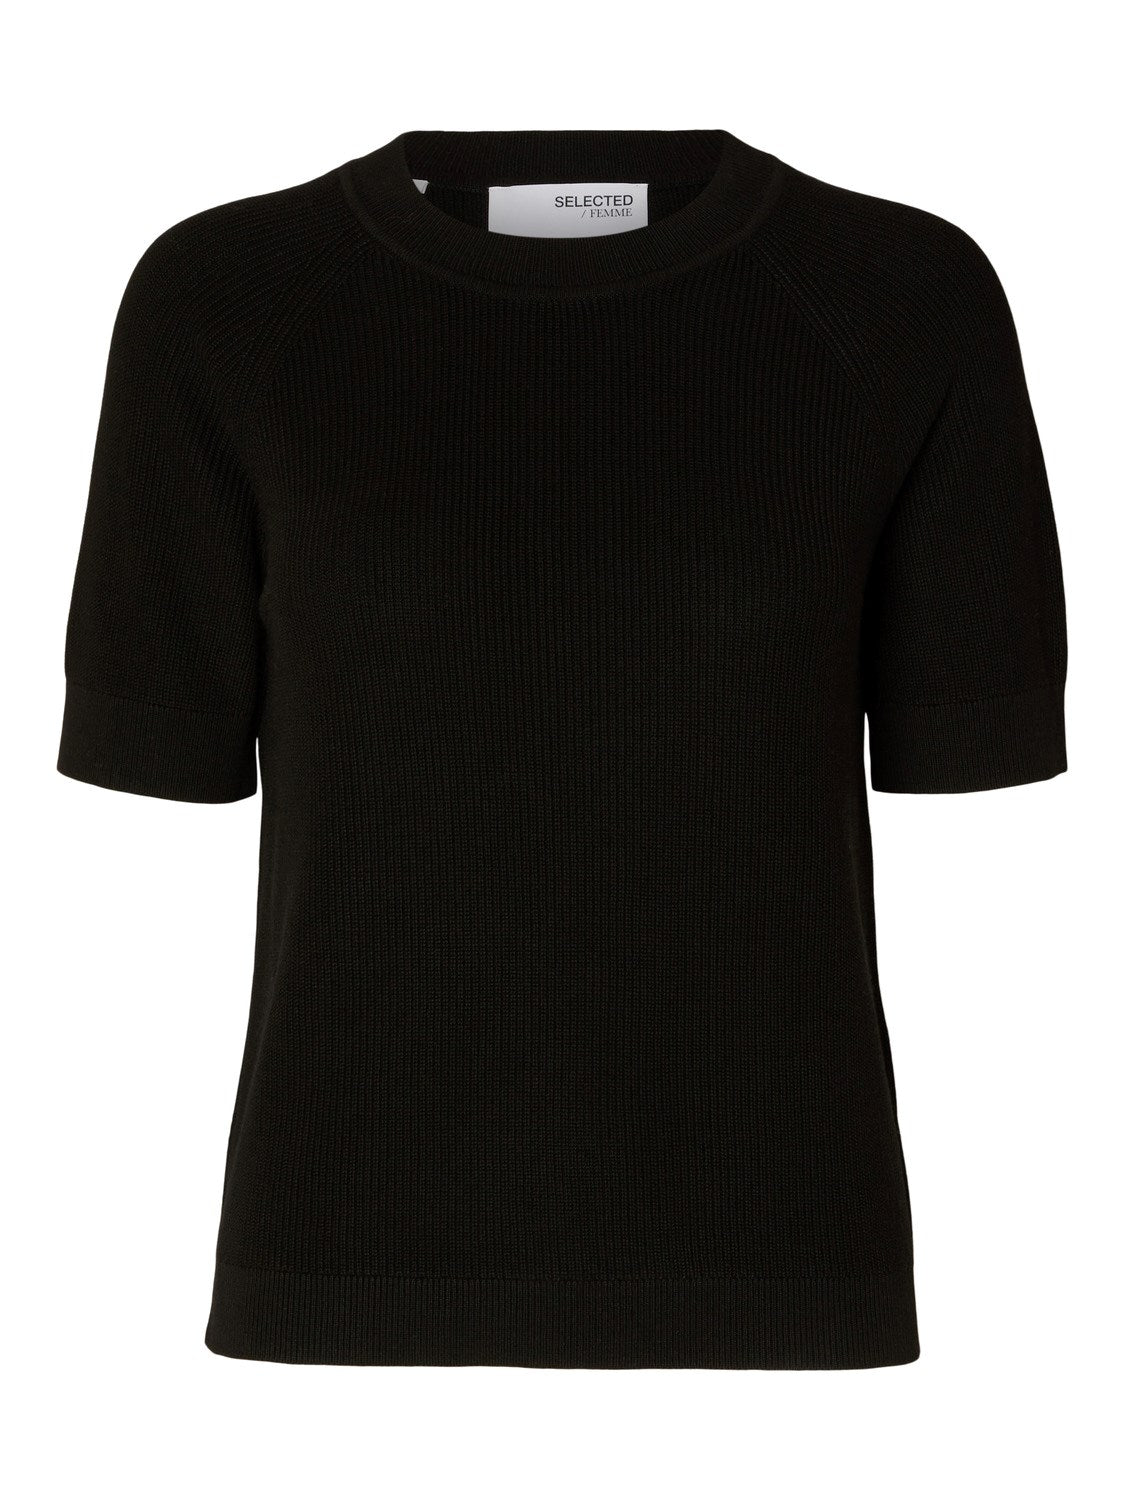 Black Short Sleeve Ribbed T-shirt - Women